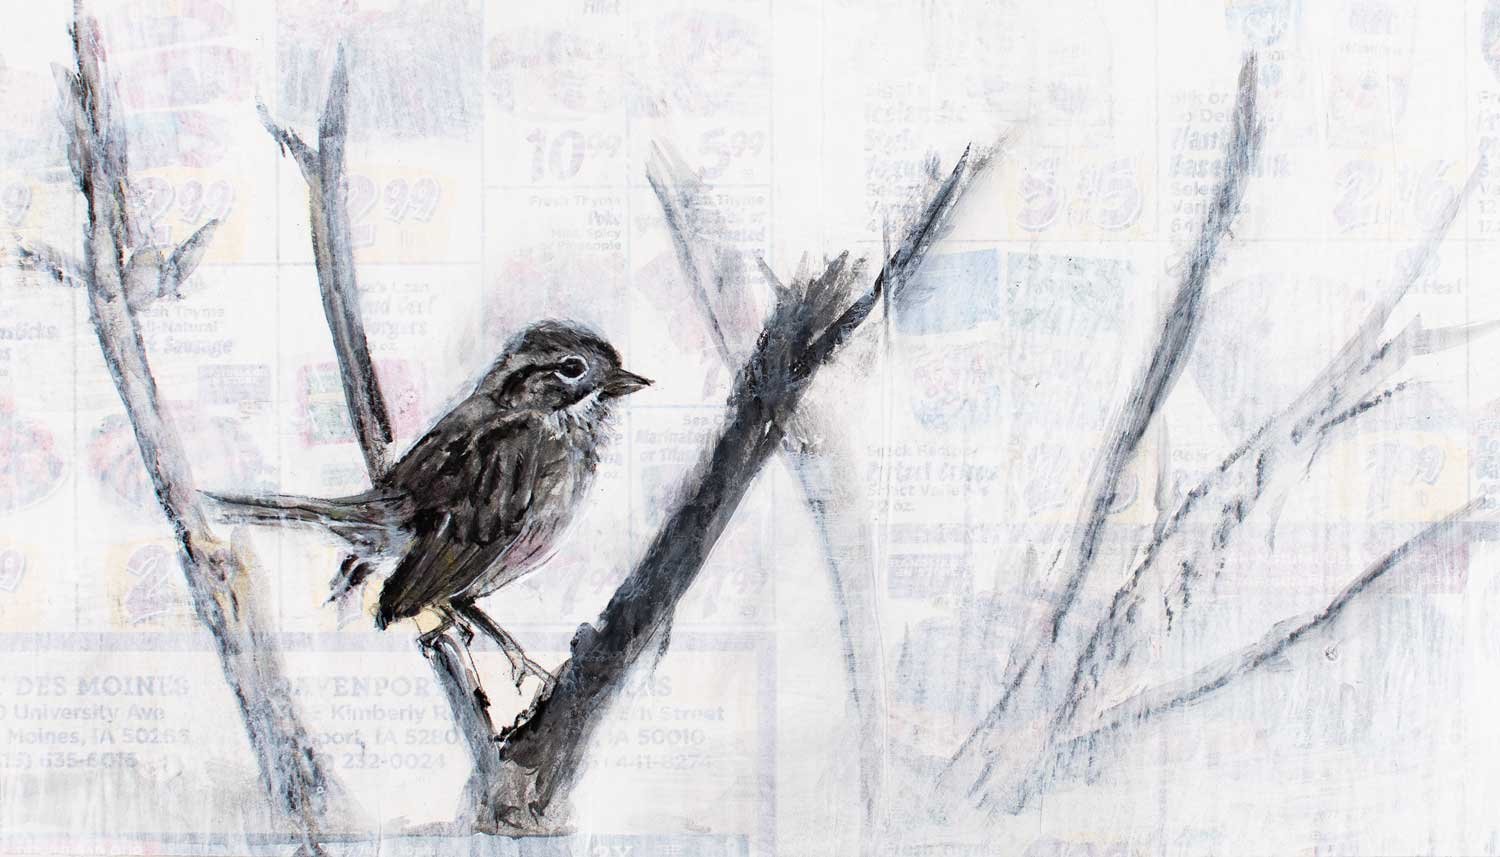 Sold | Swamp Sparrow